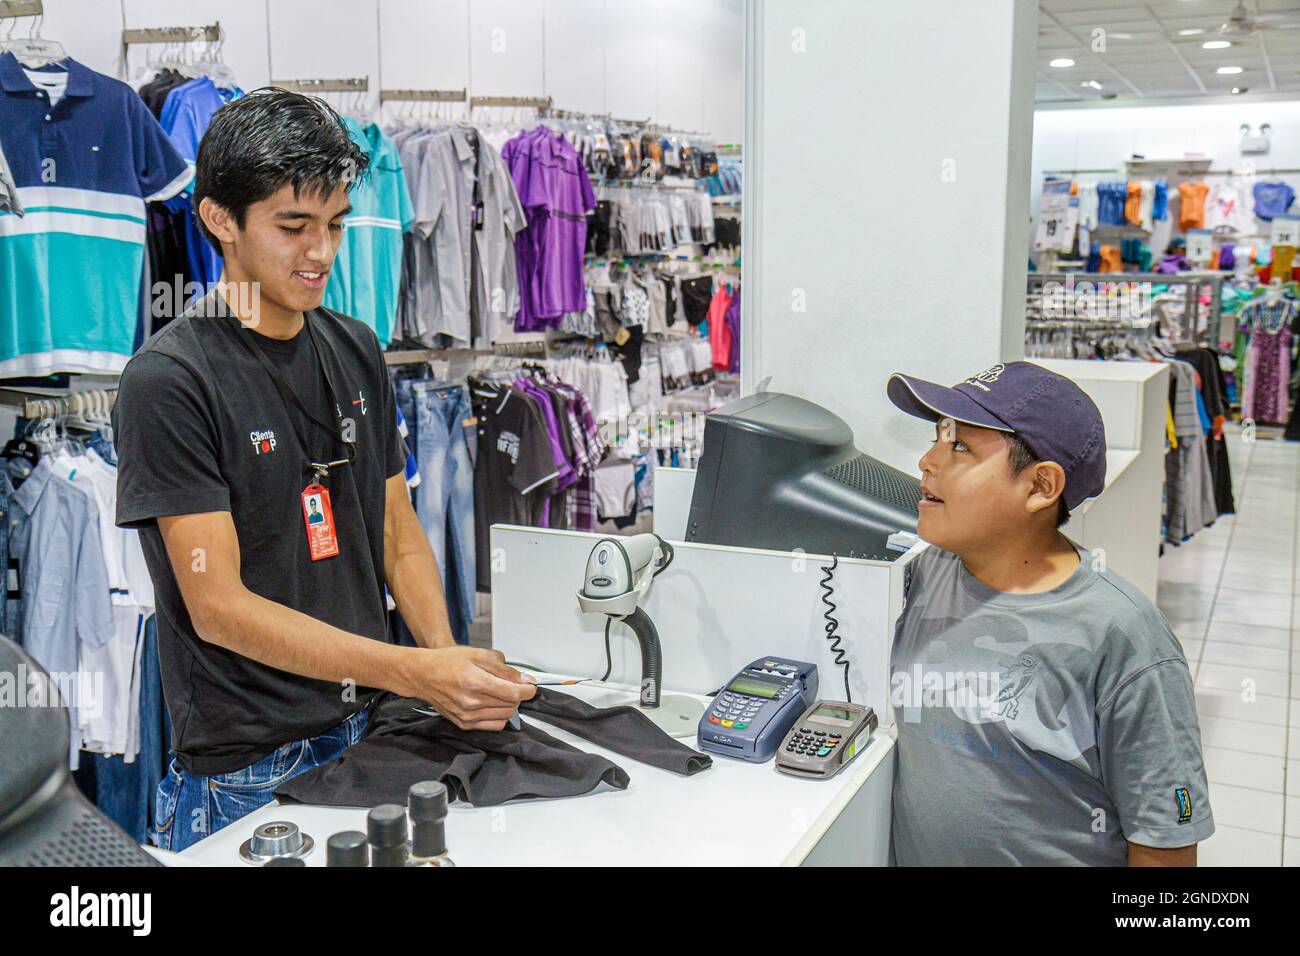 Tacna Peru,Calle San Martin,store inside interiior clothing,Hispanic boy teen teenager cashier worker employee using scanner Stock Photo